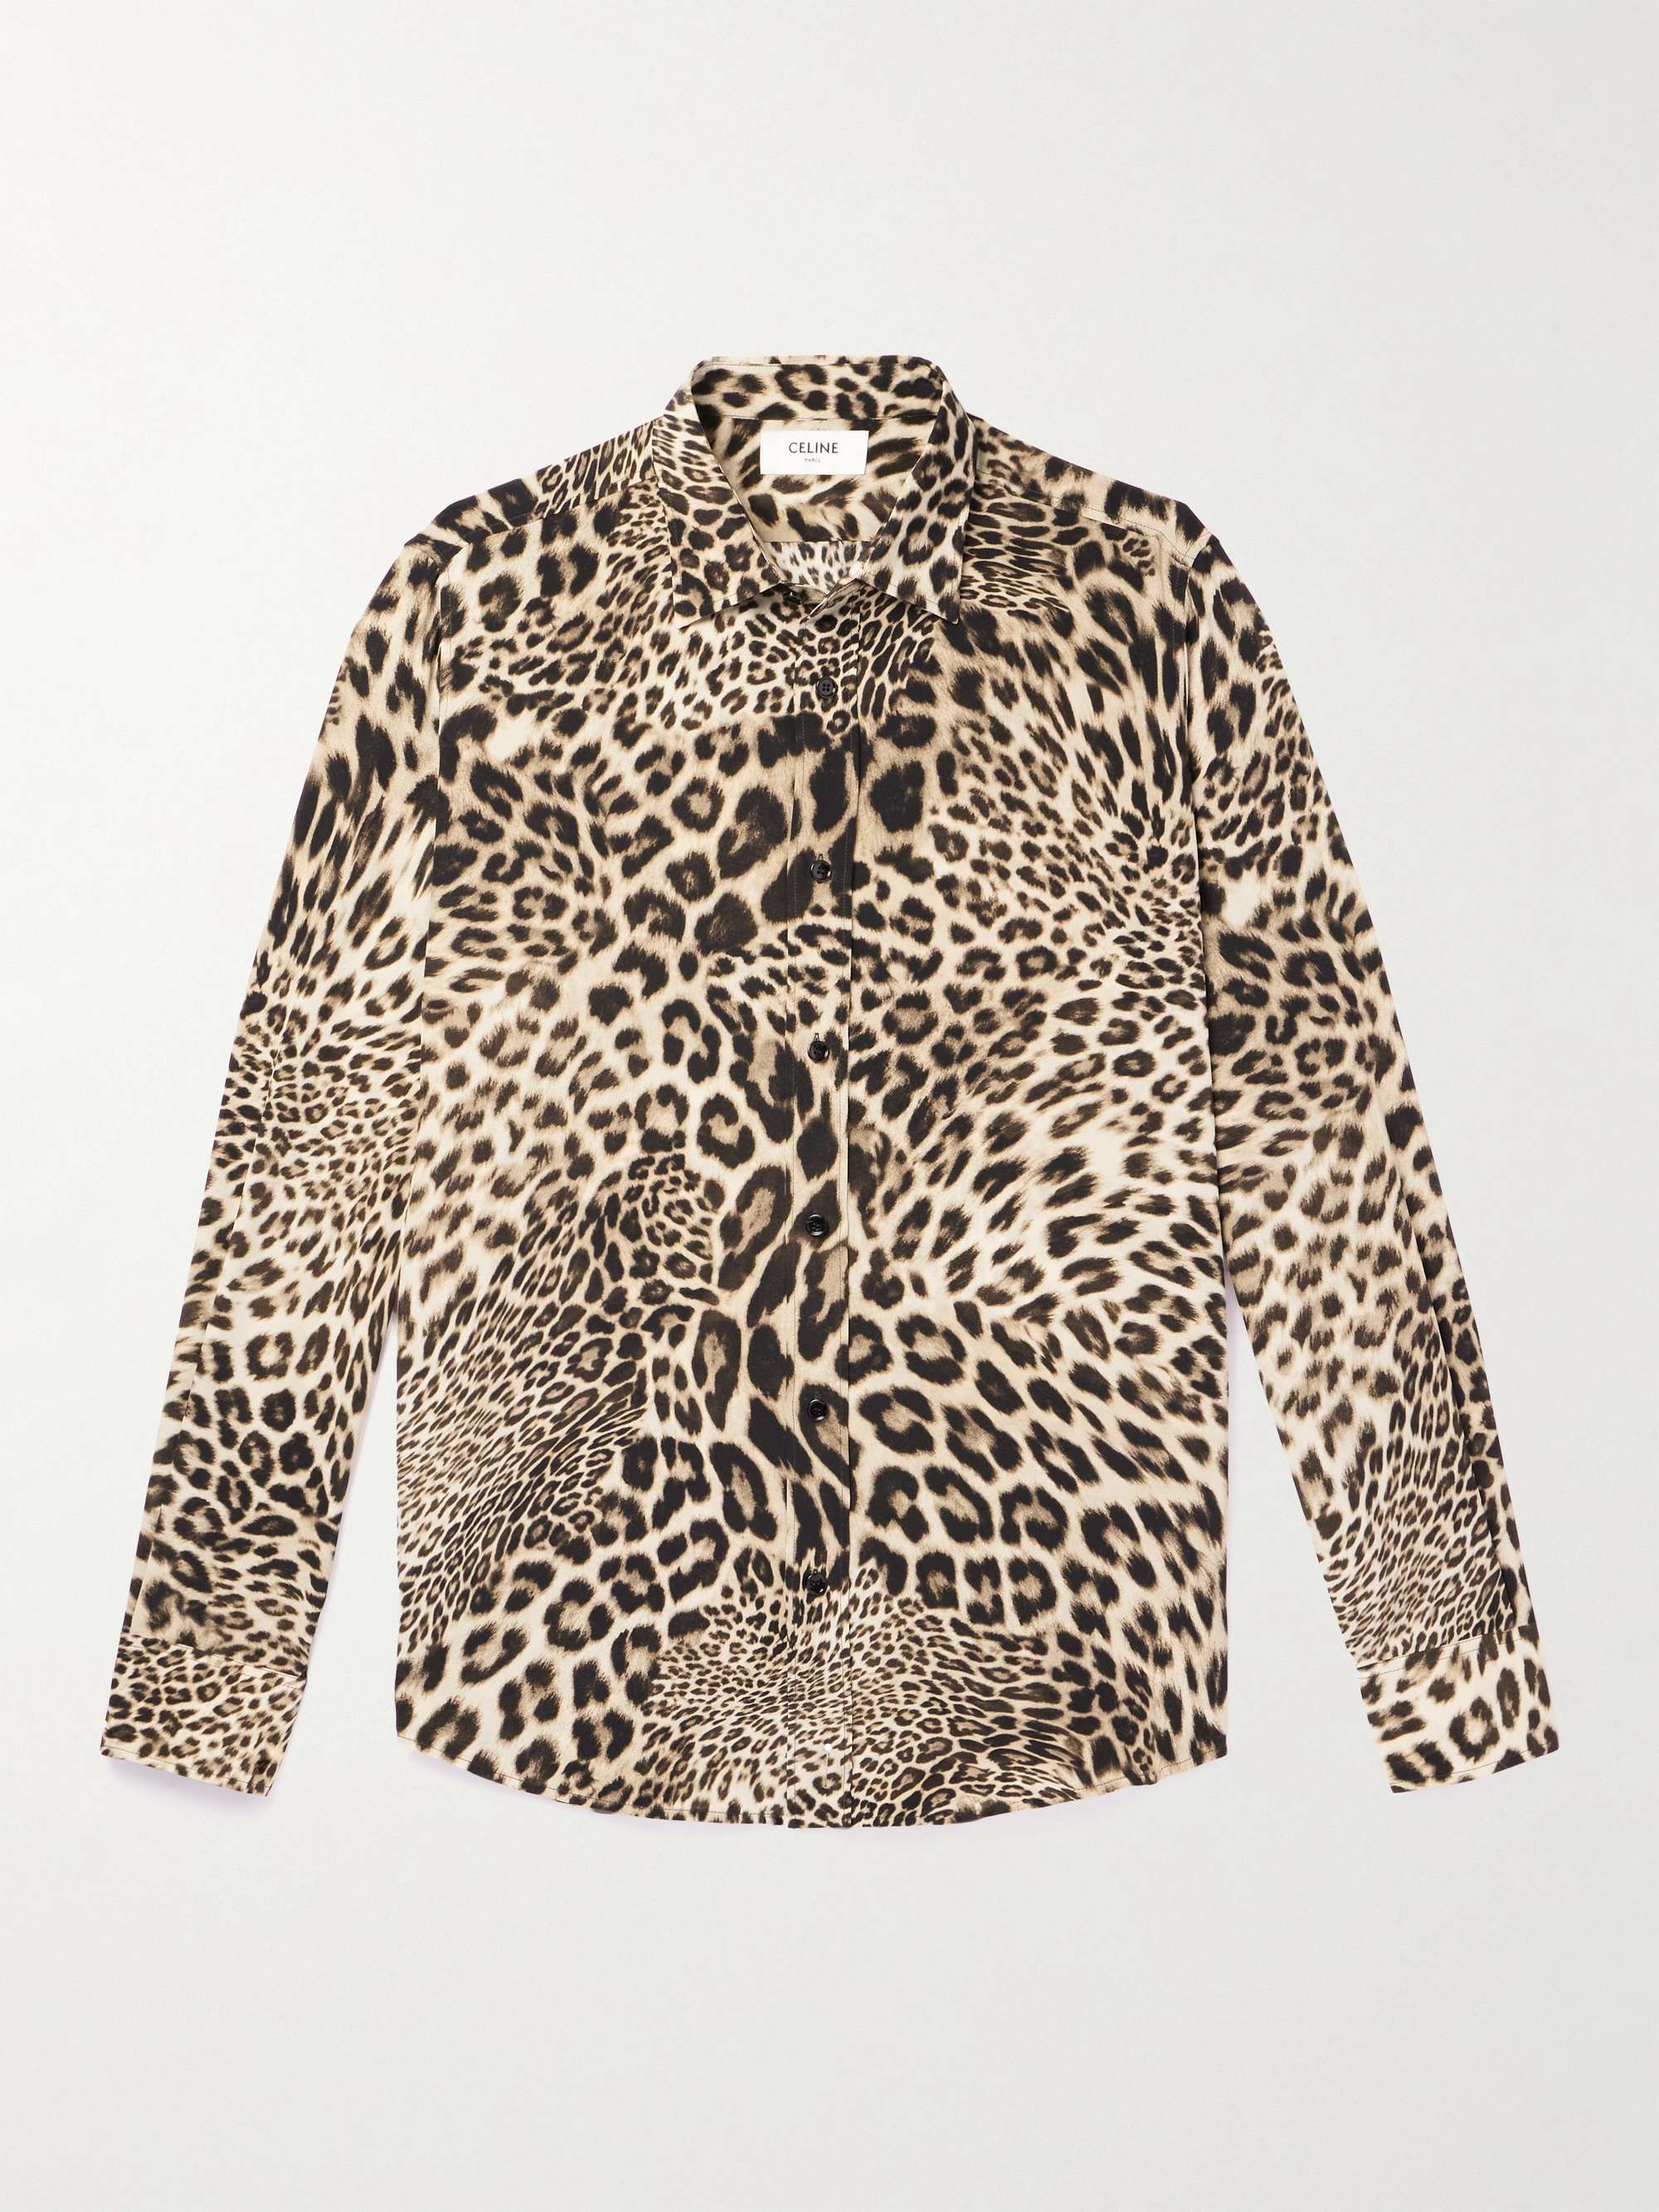 CELINE HOMME Leopard-Print Silk Crepe de Chine Shirt for Men | MR PORTER